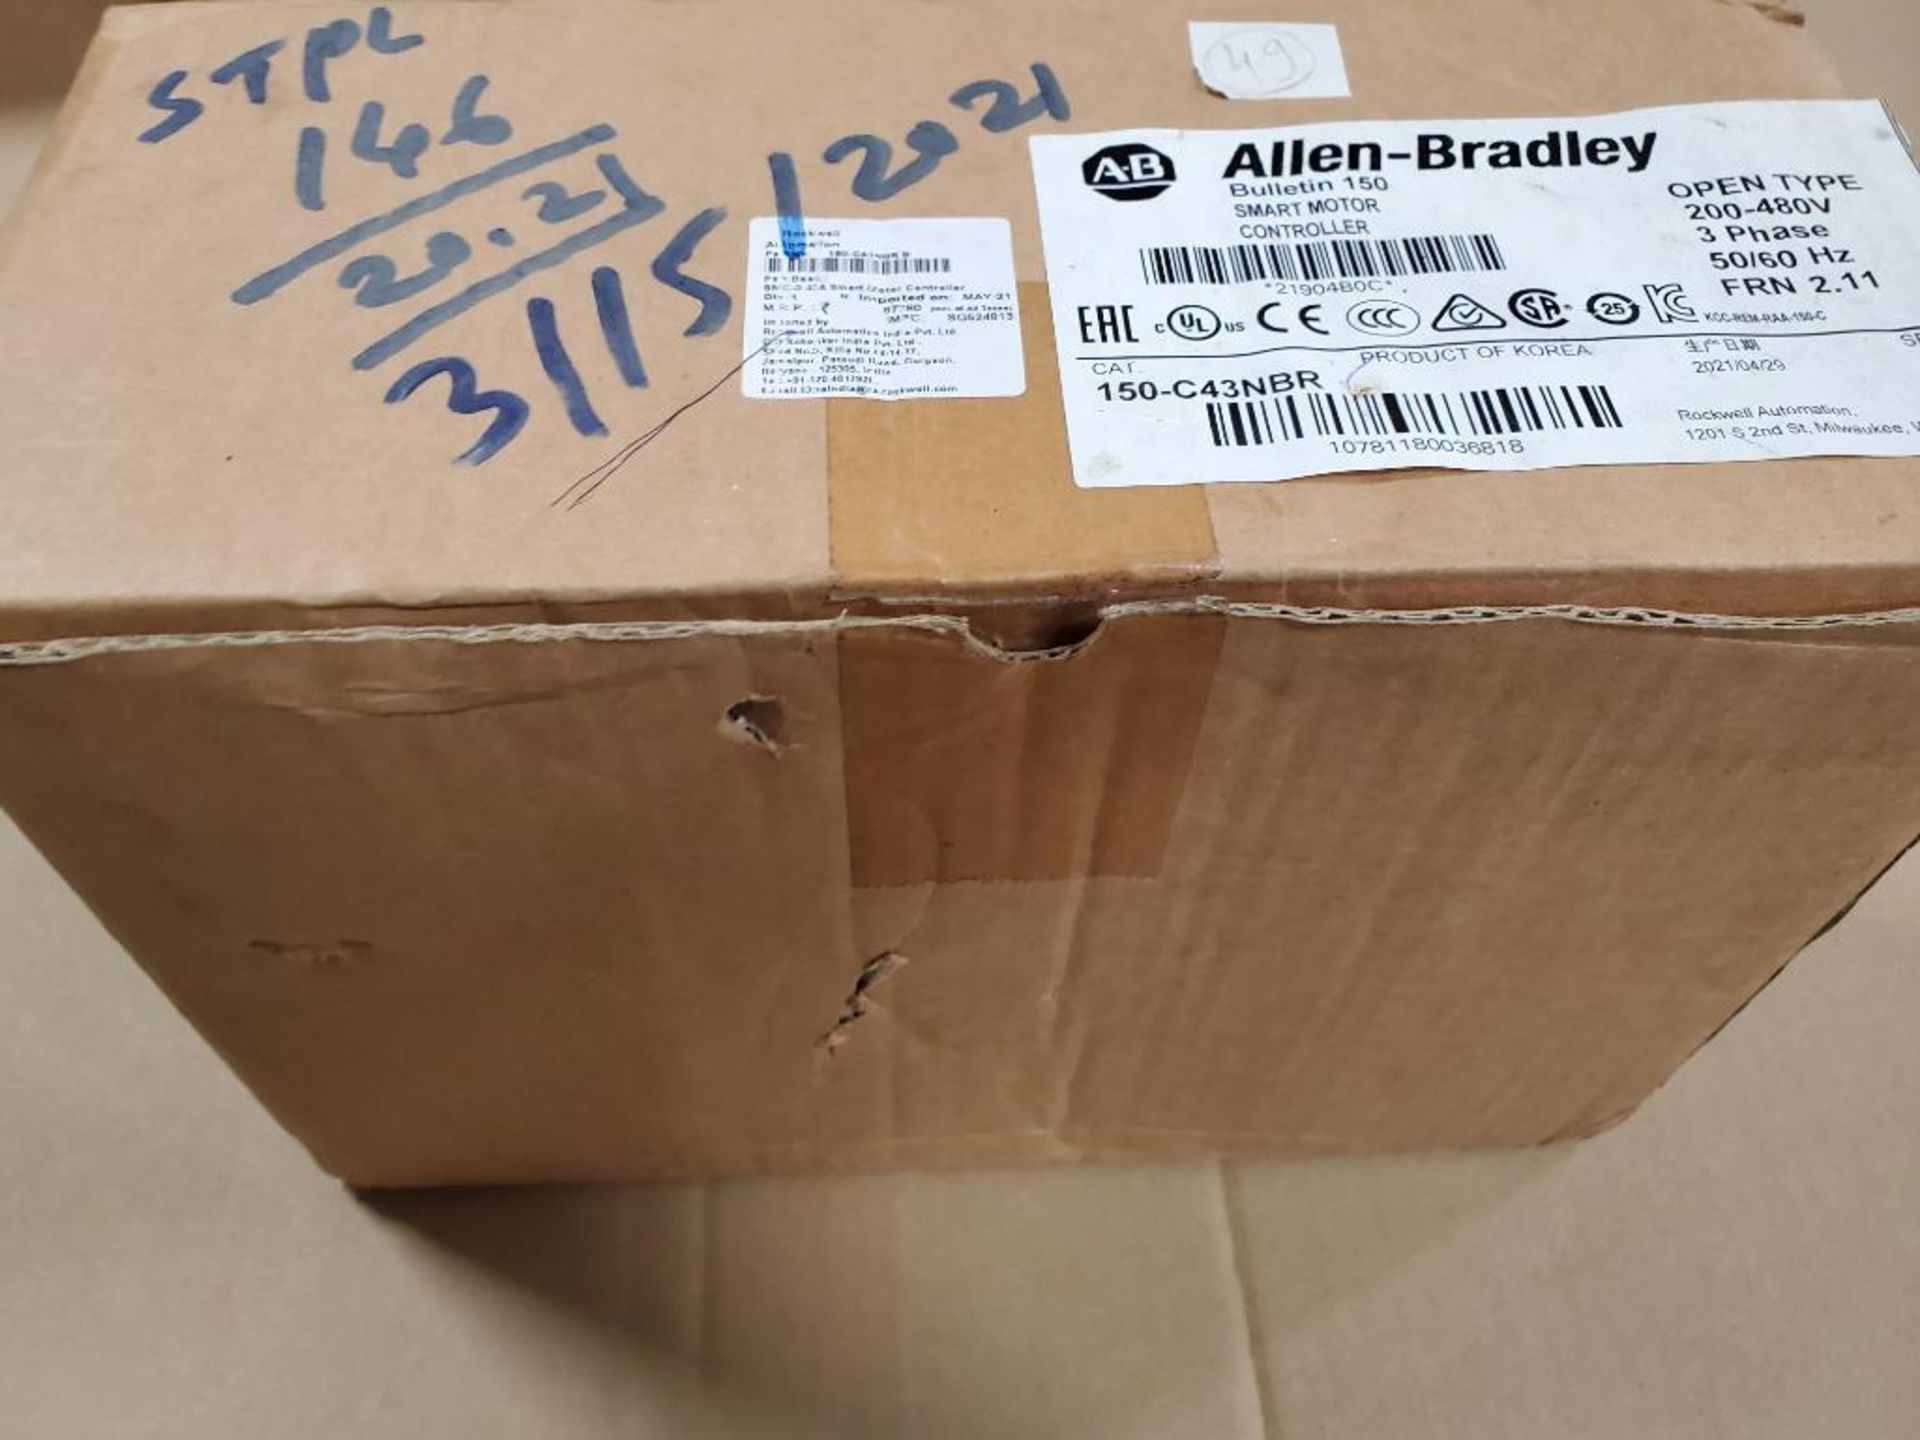 Allen Bradley smart motor controller 150-C43NBR. New in box. - Image 5 of 11